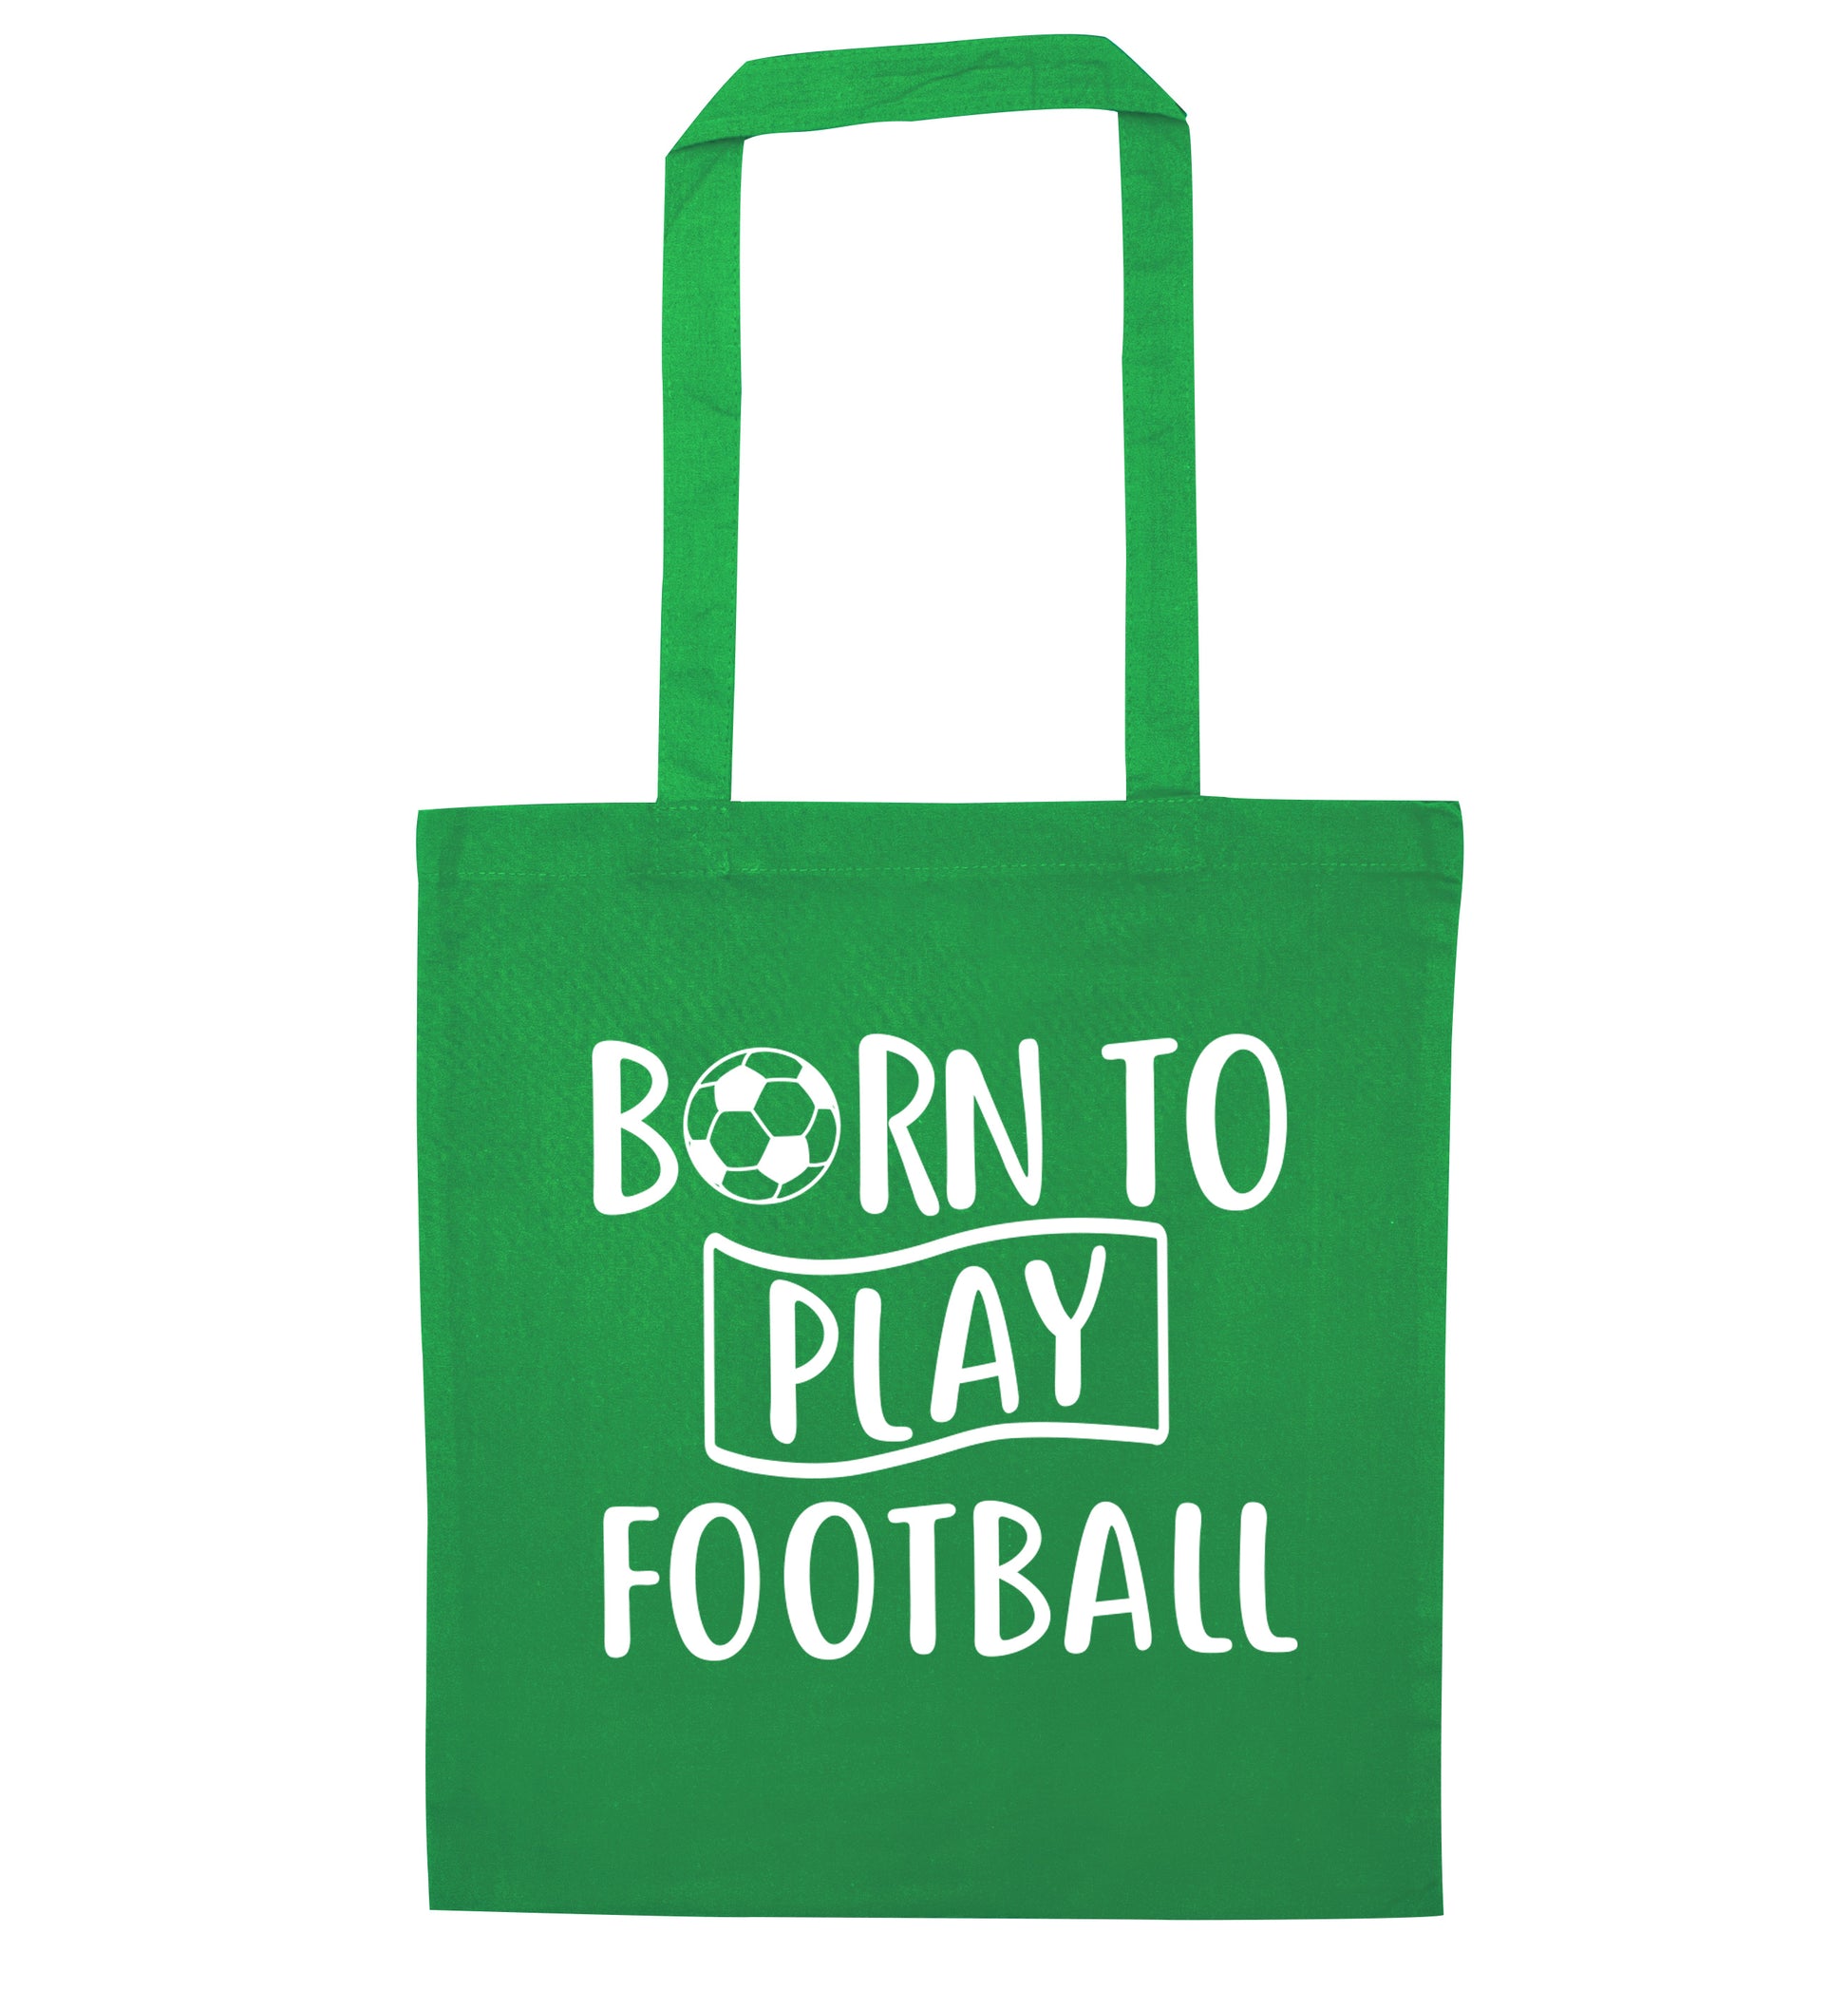 Born to play football green tote bag